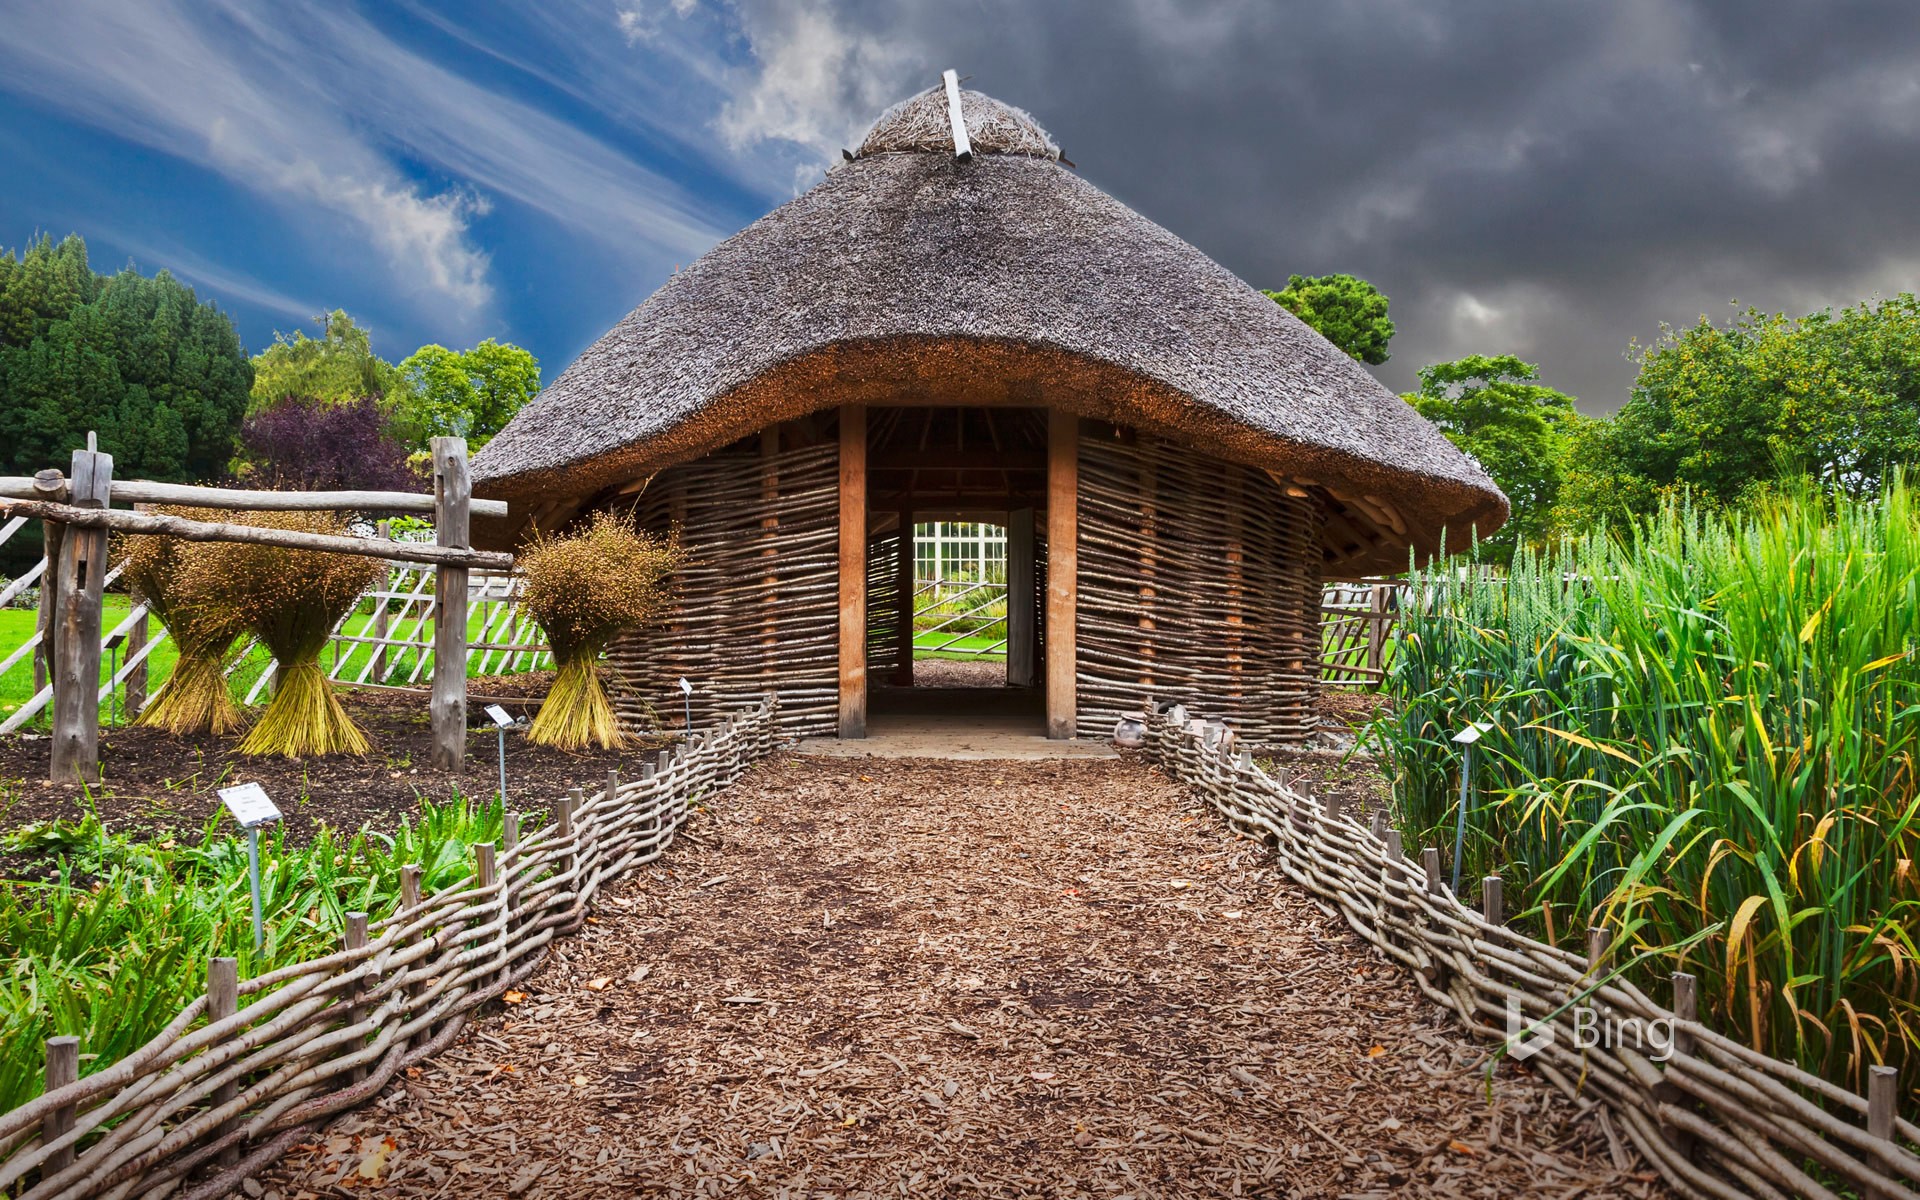 Replica of a Viking home in Dublin National Botanic Gardens, Ireland